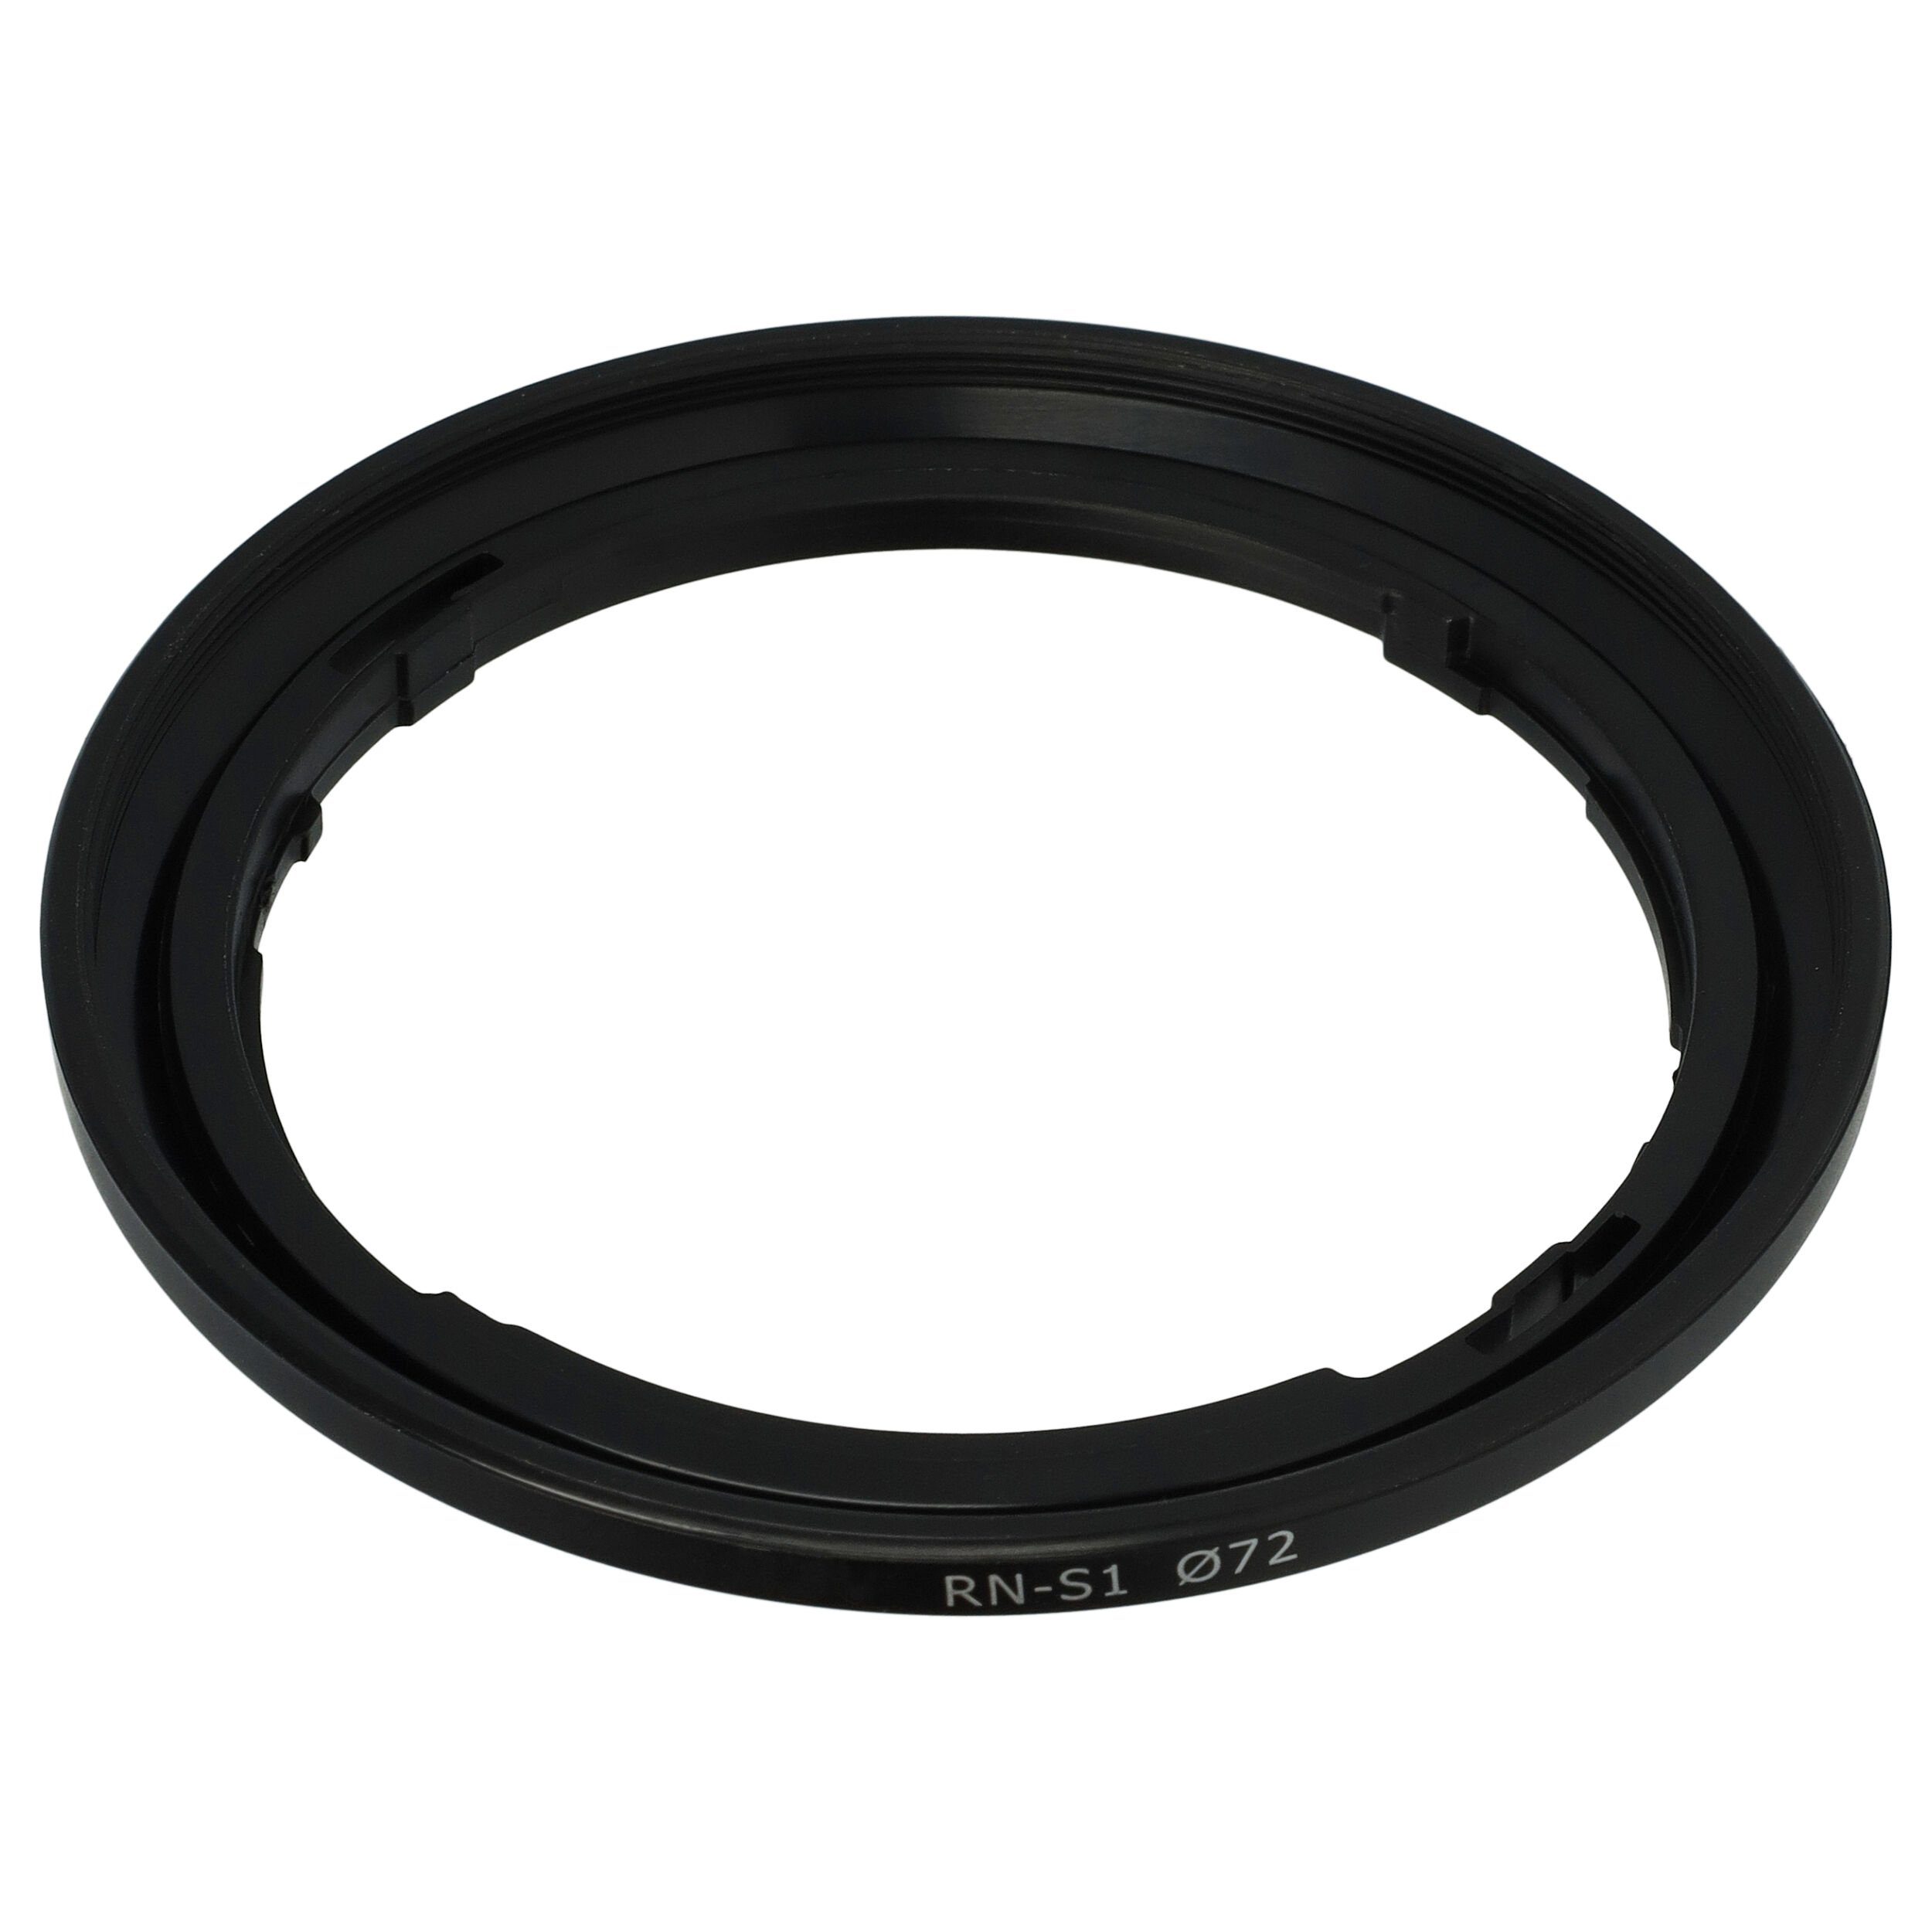 FinePix passend Objektivzubehör Fujifilm Digitalkamera Kamera S1 vhbw für / Foto Foto /